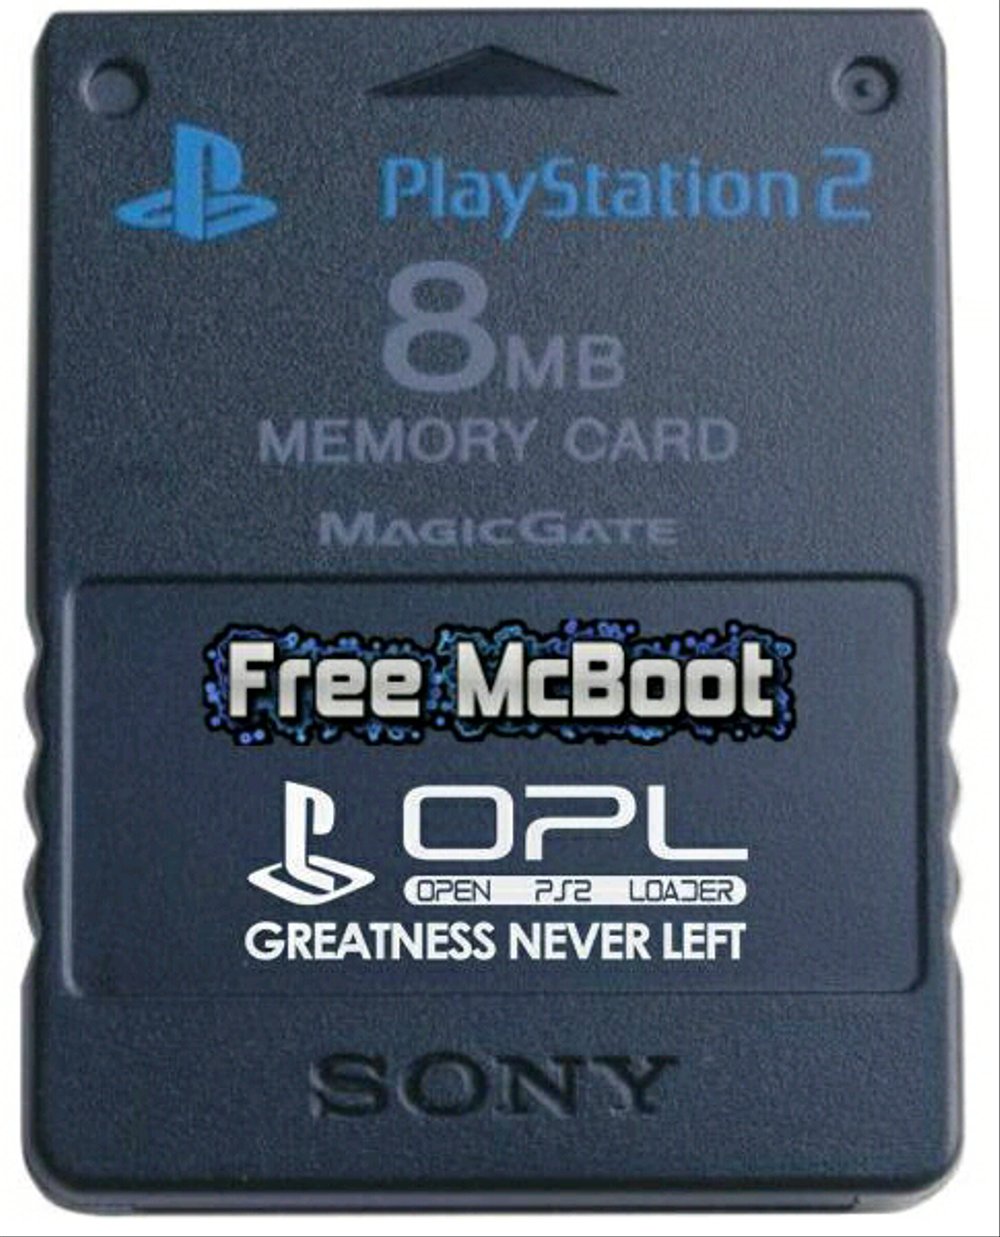 free memory card boot ps2